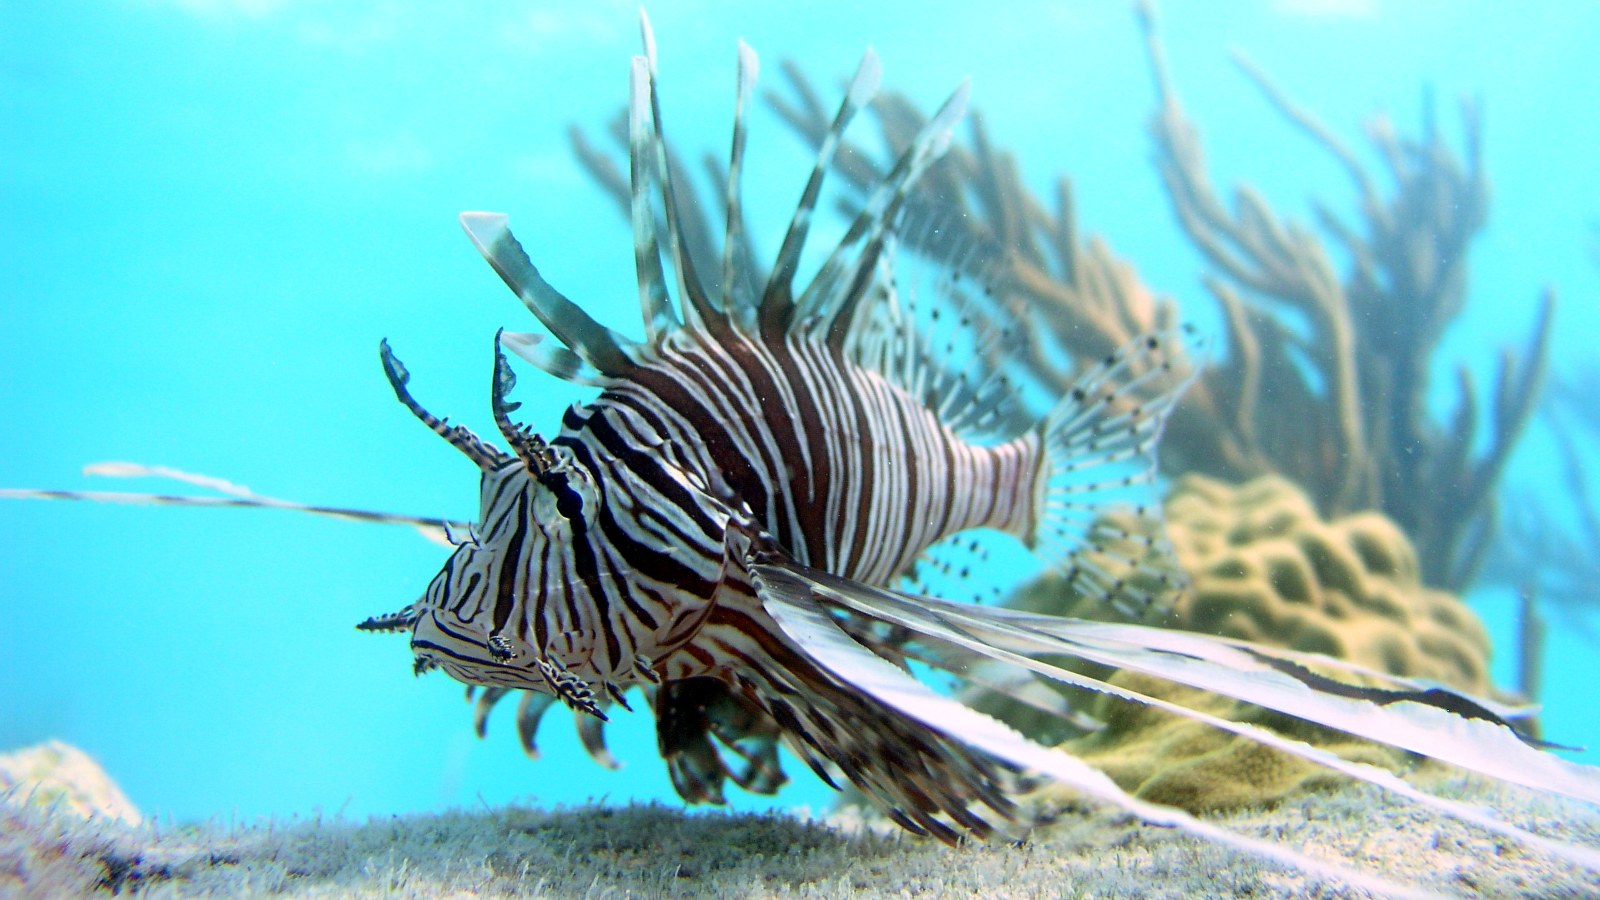 220107-lionfish-in-bahamas-teaser-16x9-1600px.jpg